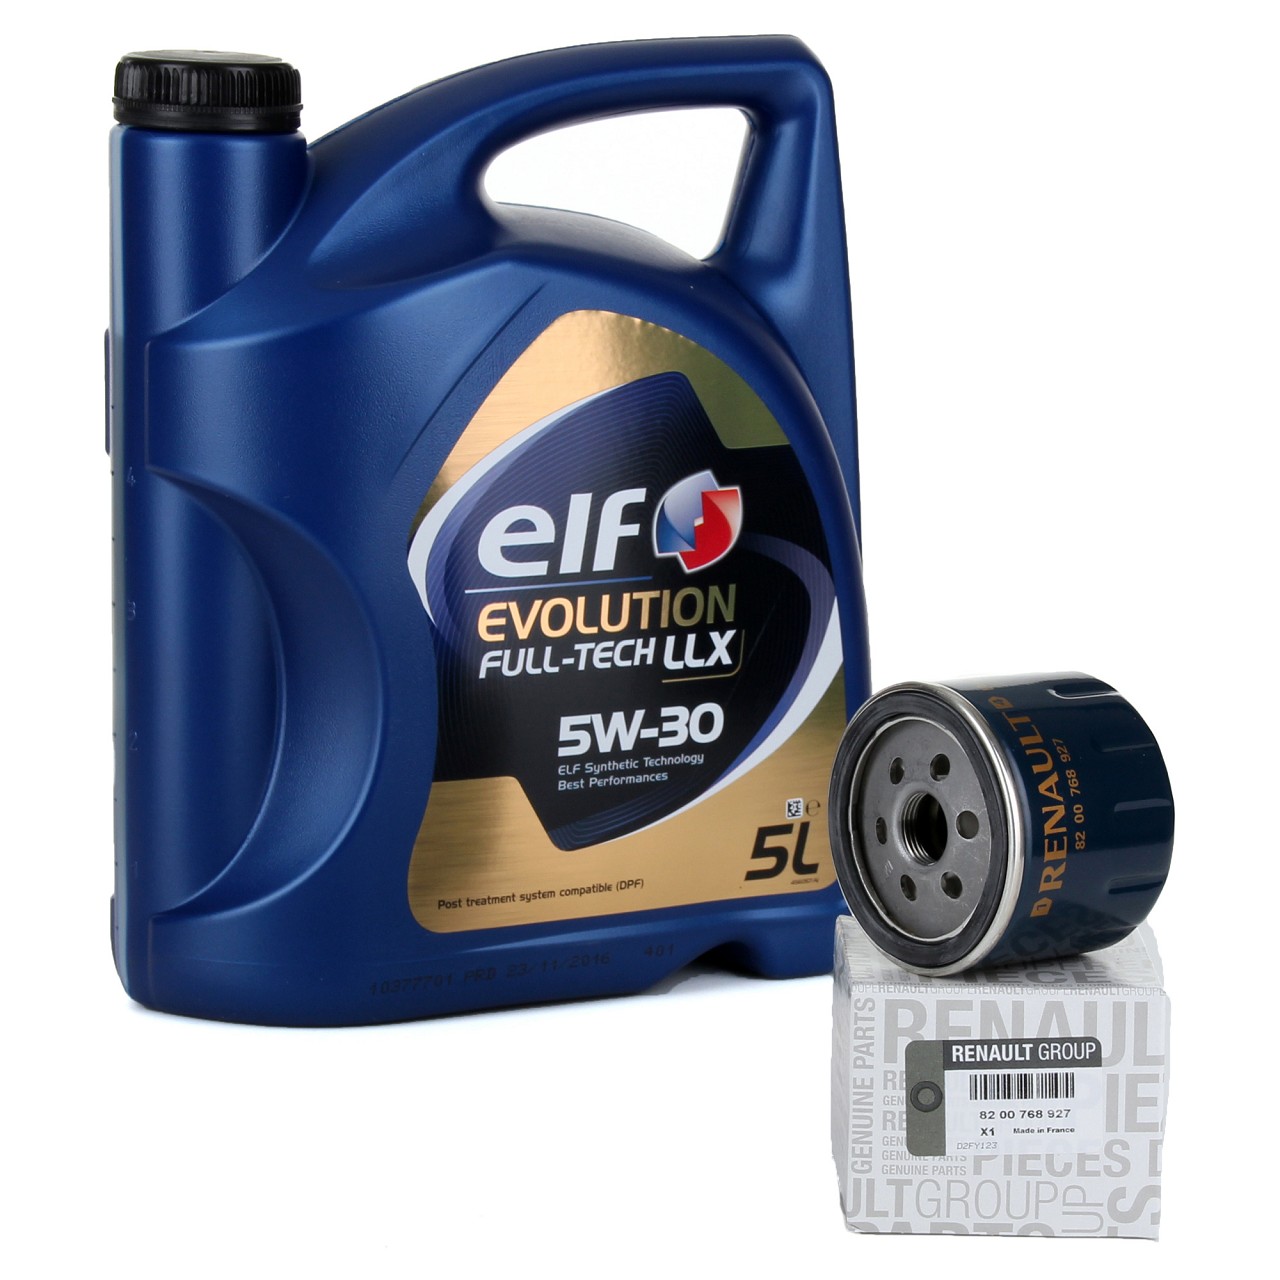 5L elf Evolution Full-Tech LLX 5W30 Motoröl ORIGINAL RENAULT Ölfilter 8200768927